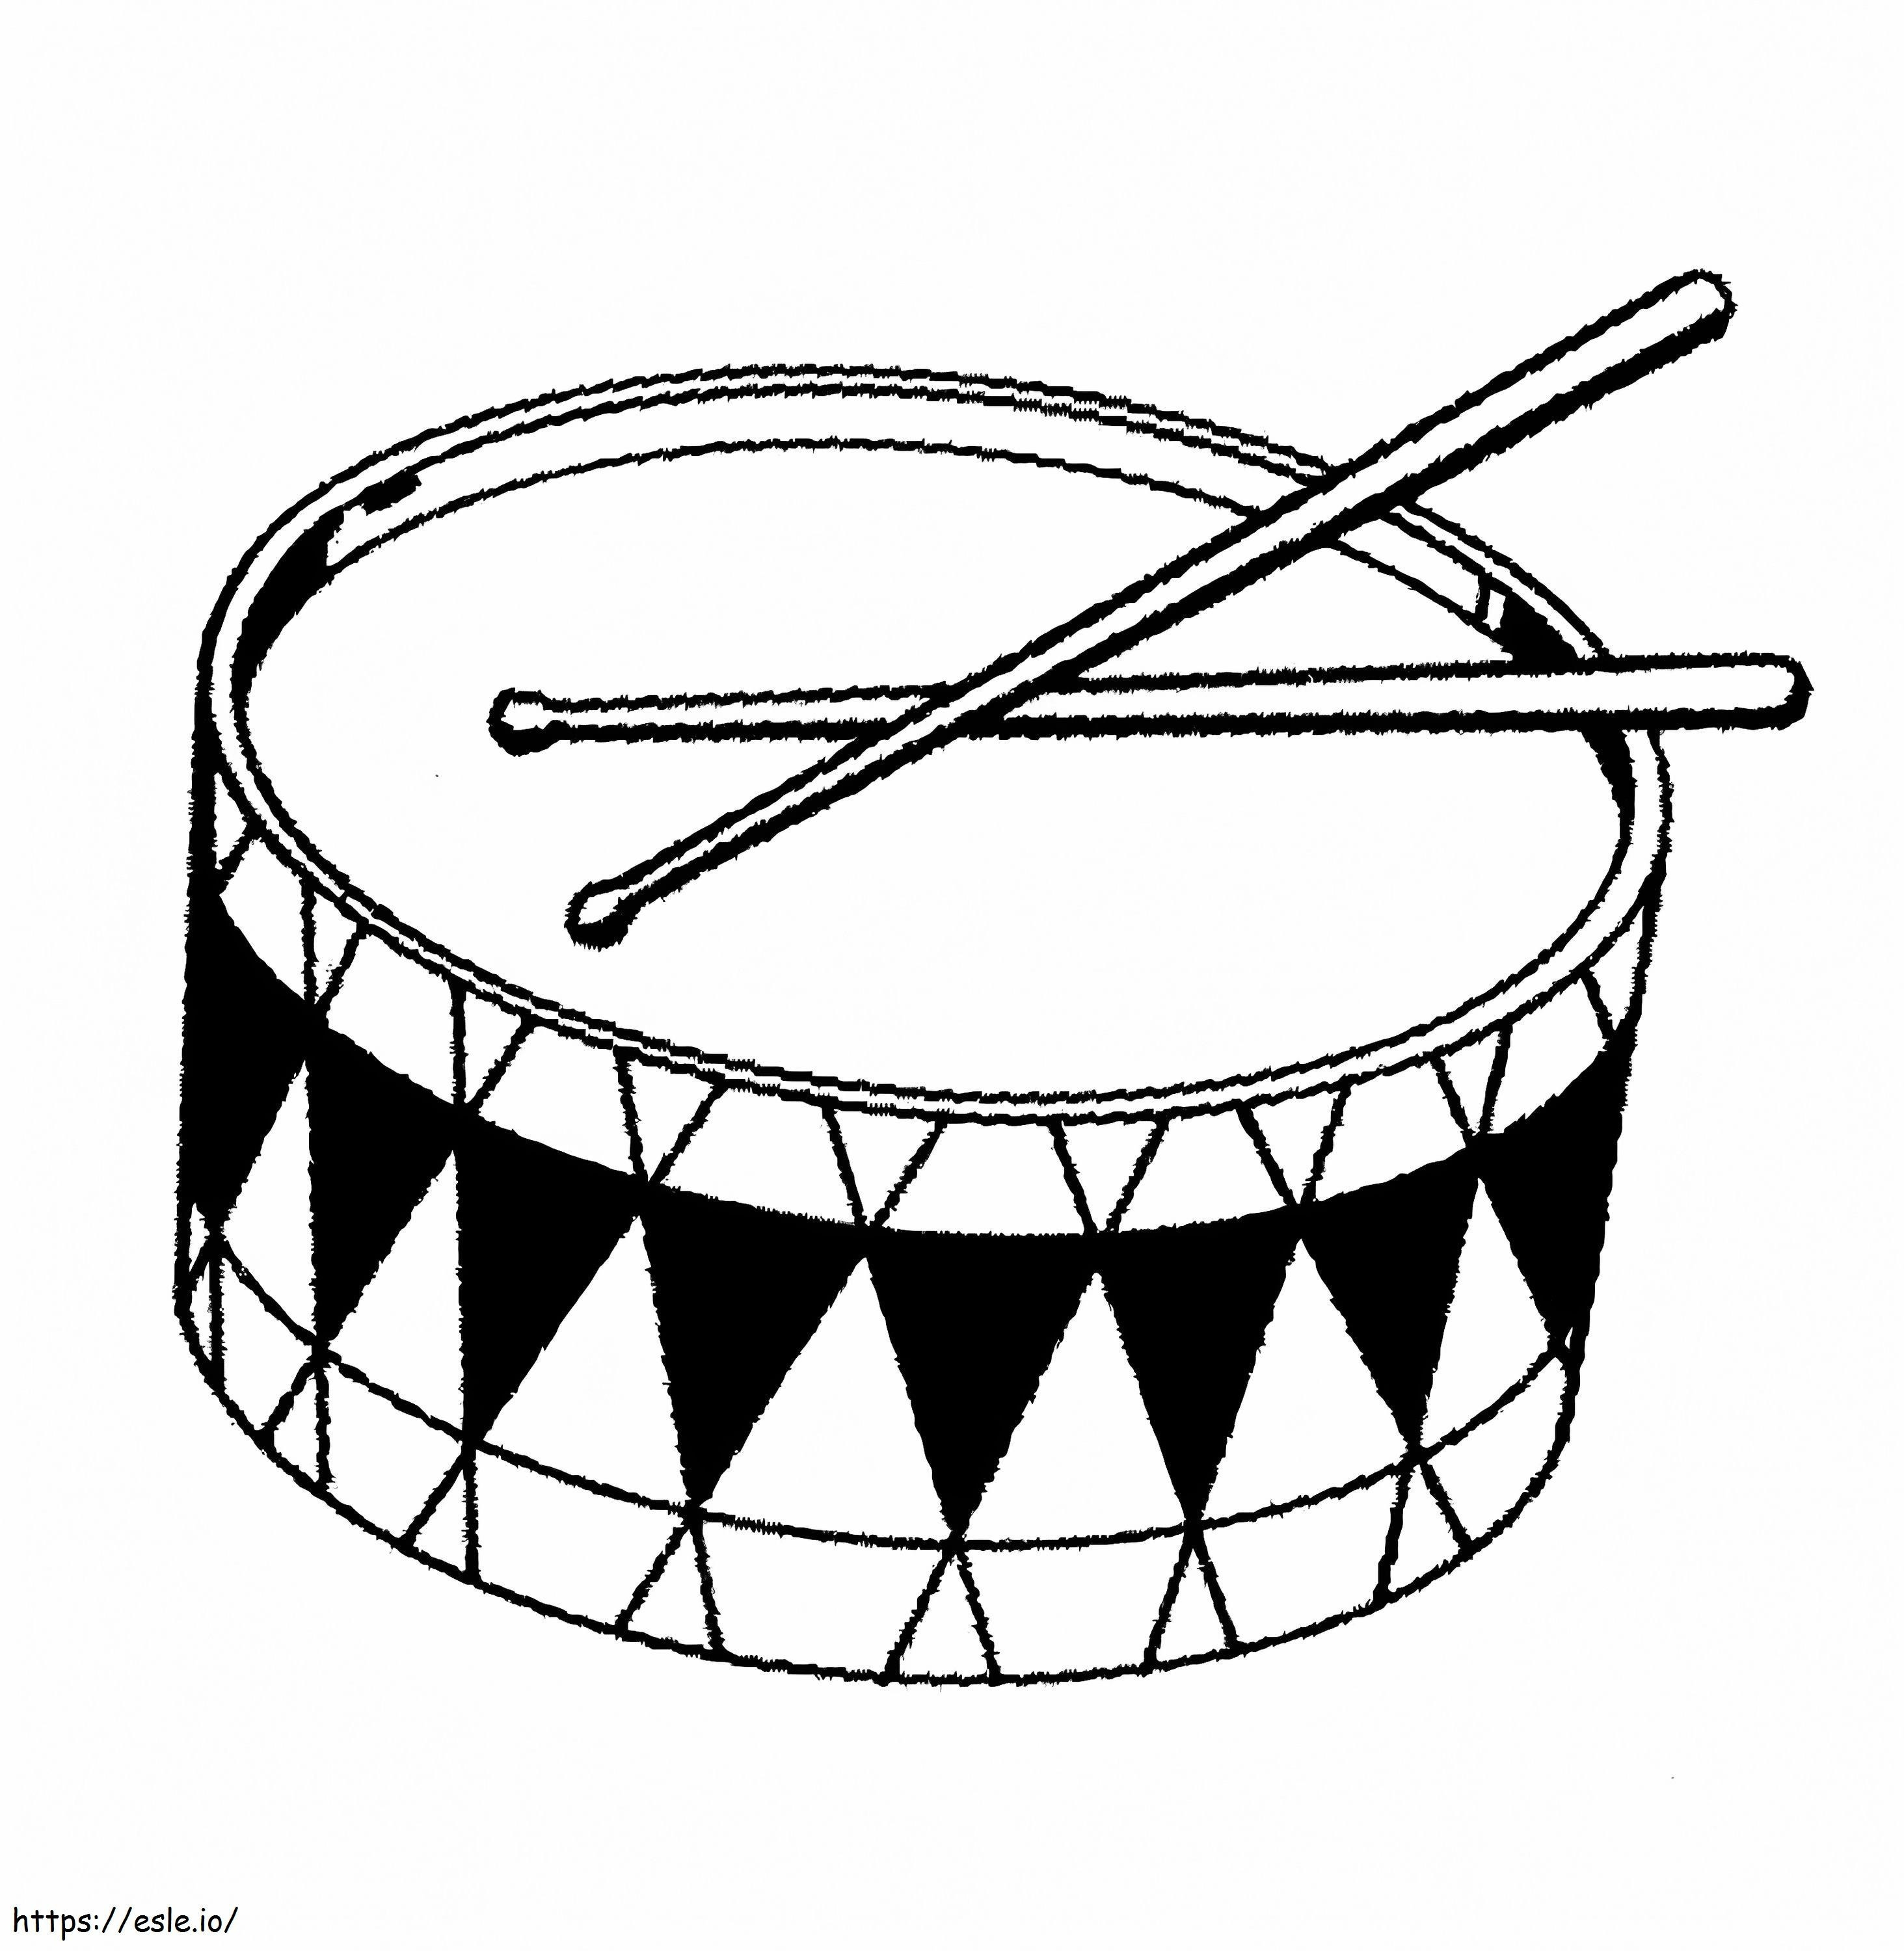 Big Drum coloring page